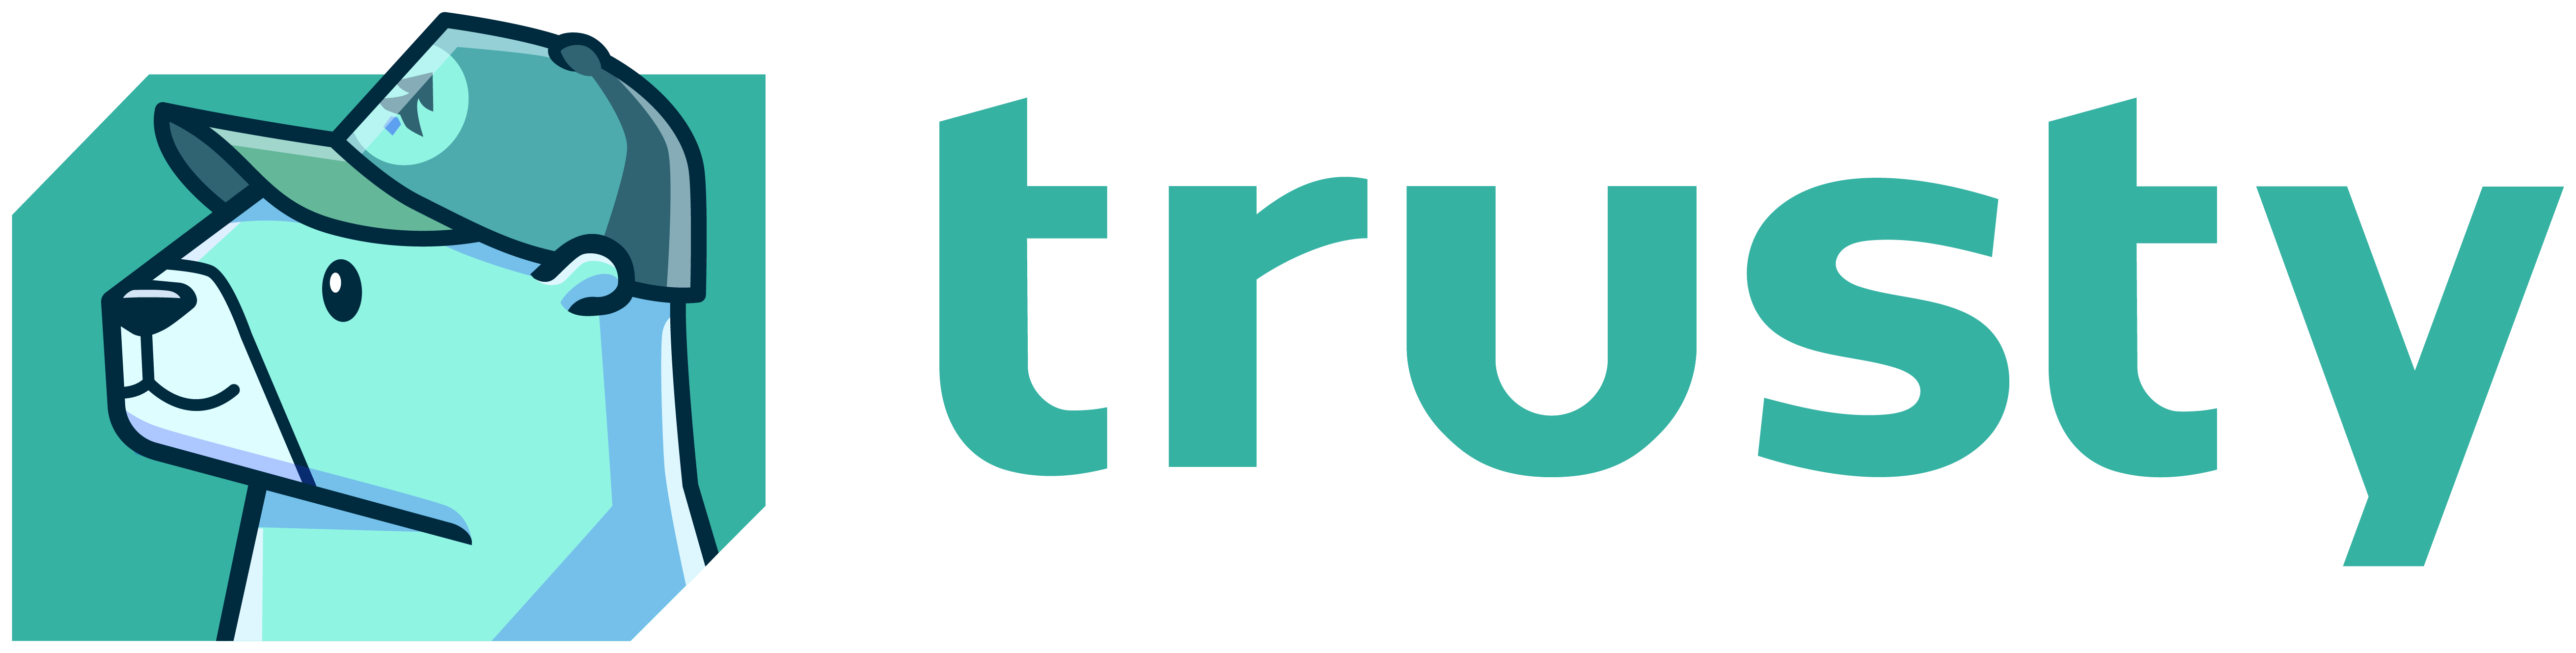 Trusty by Stacklok Logo